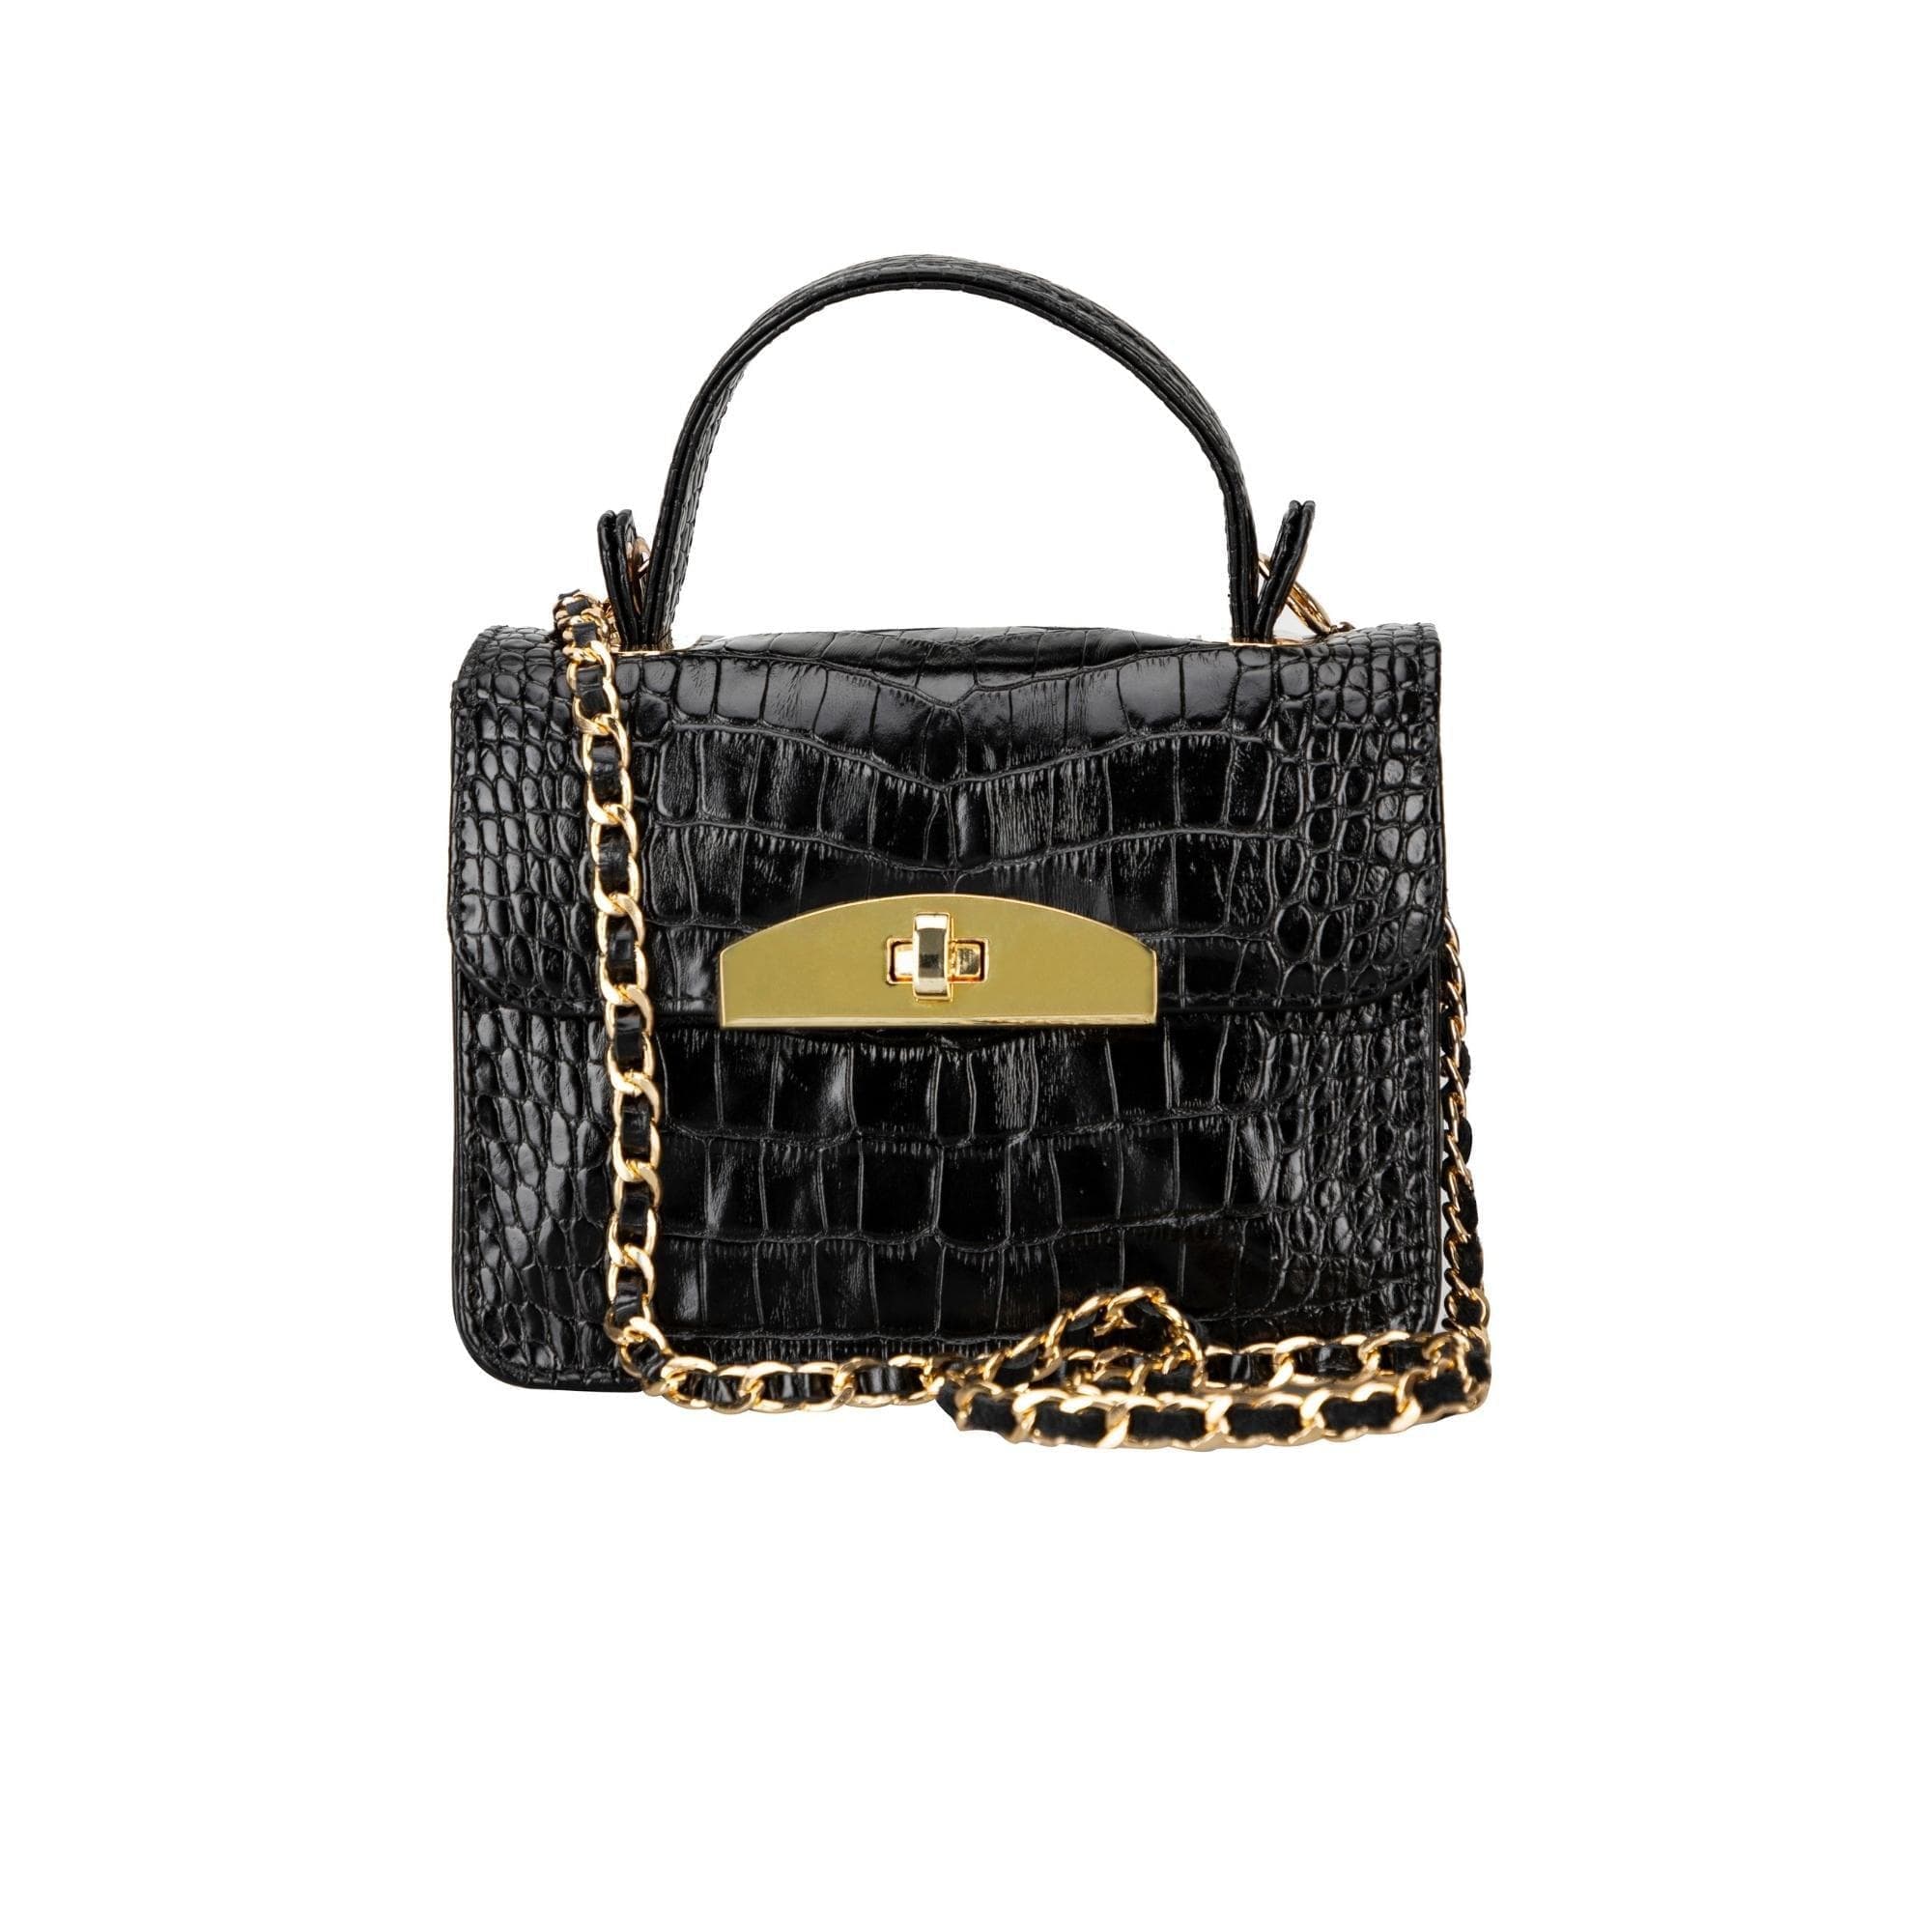 Alisha Geniune Leather Women’s Bag Black Croc Bouletta LTD